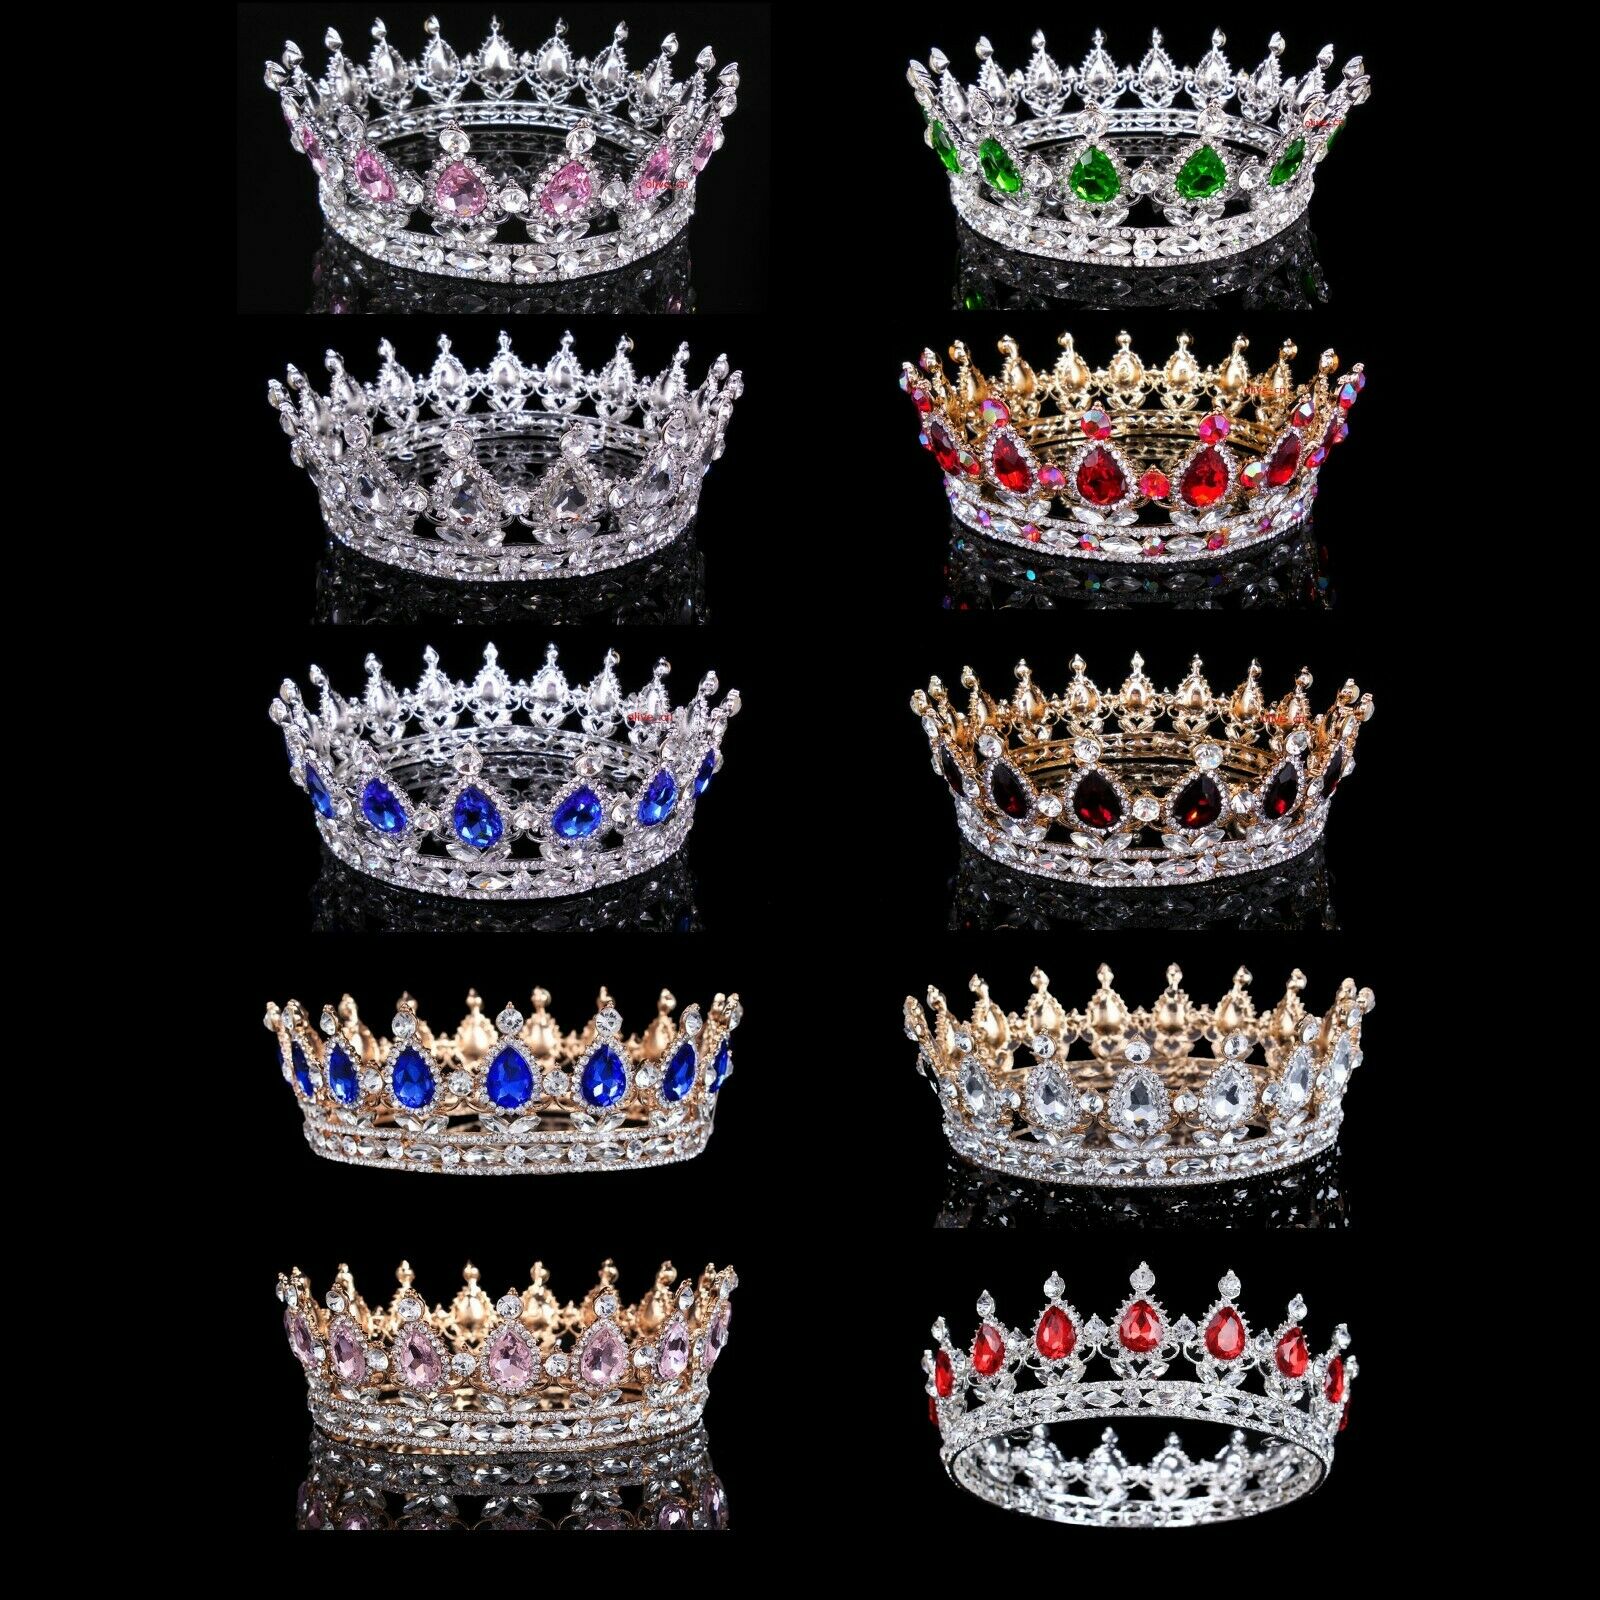 5cm High Princess Queen Round Crown Wedding Tiara 24 Colors 13cm Diameter